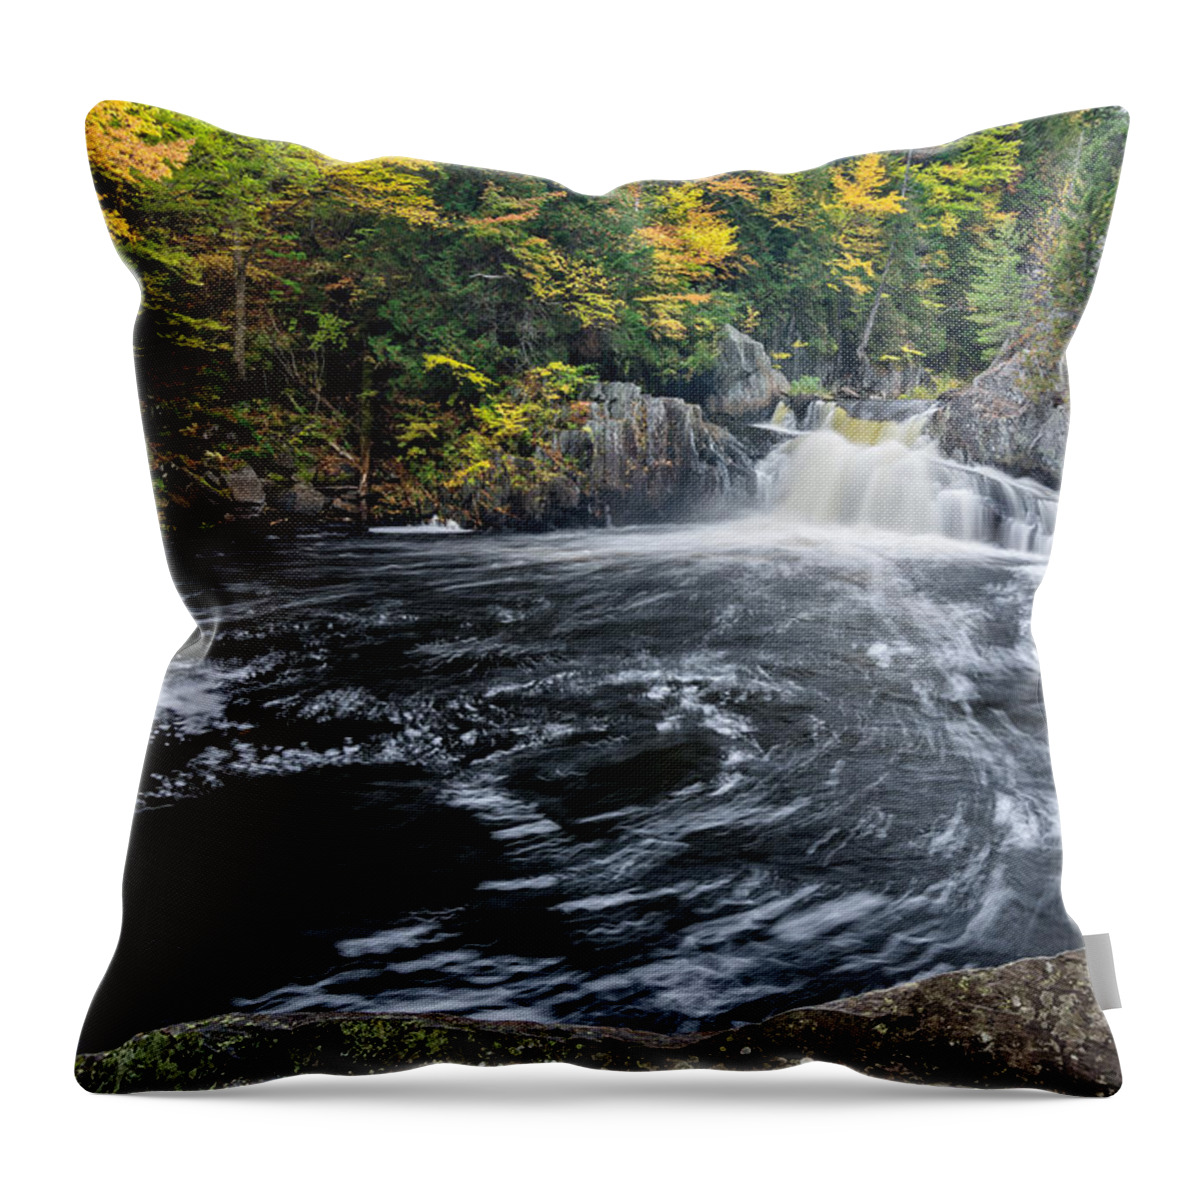 Buttermilk Falls Throw Pillow featuring the photograph Buttermilk Falls Gulf Hagas Me. #1 by Michael Hubley